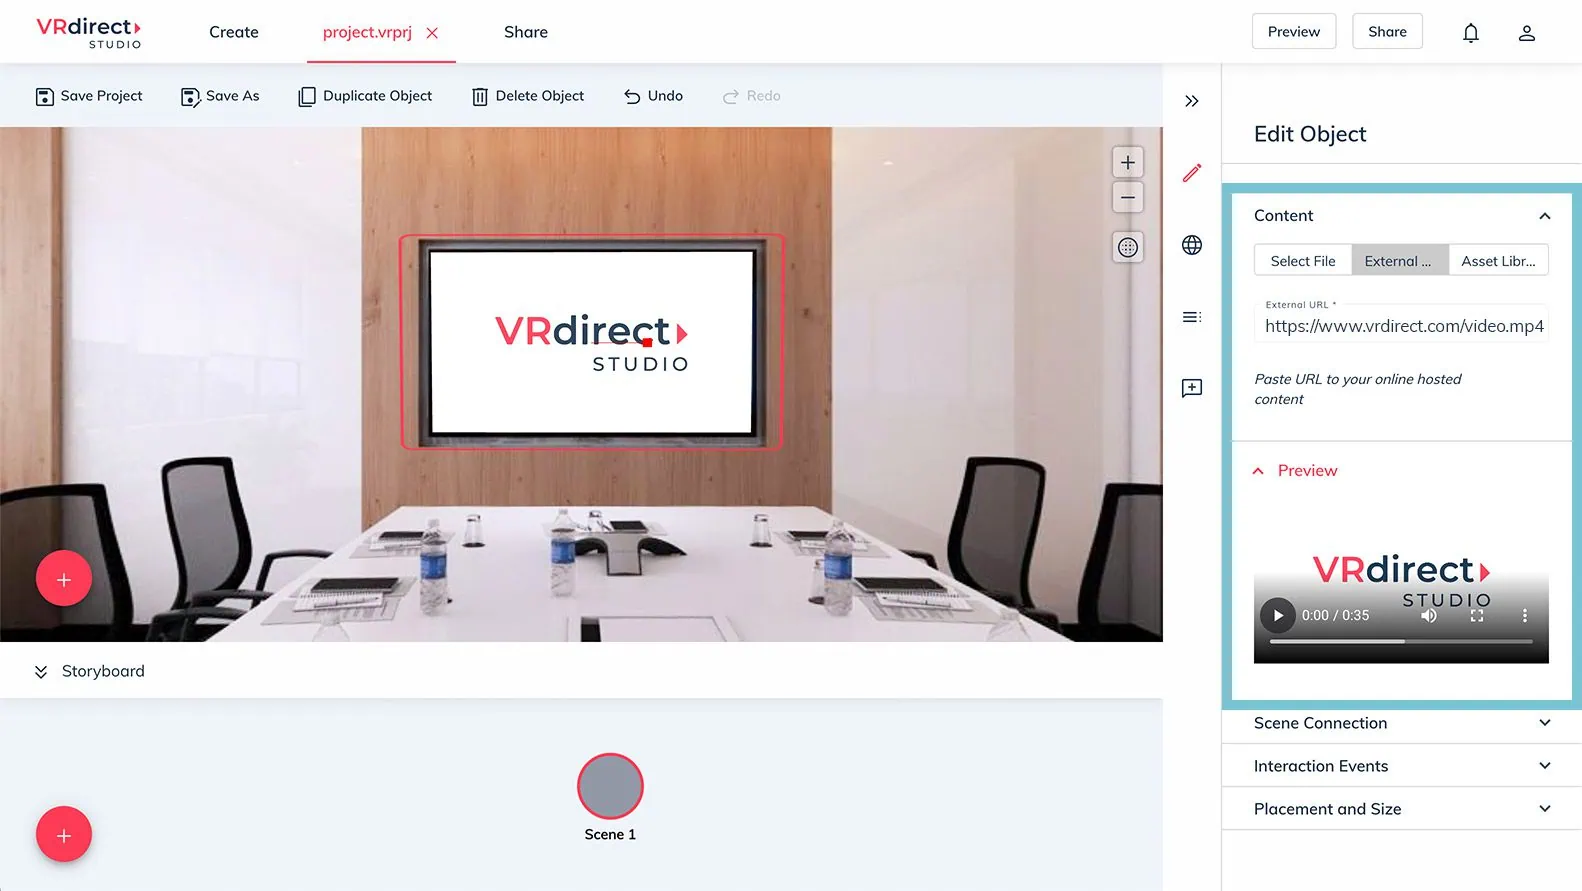 VRdirect Studio: External videos